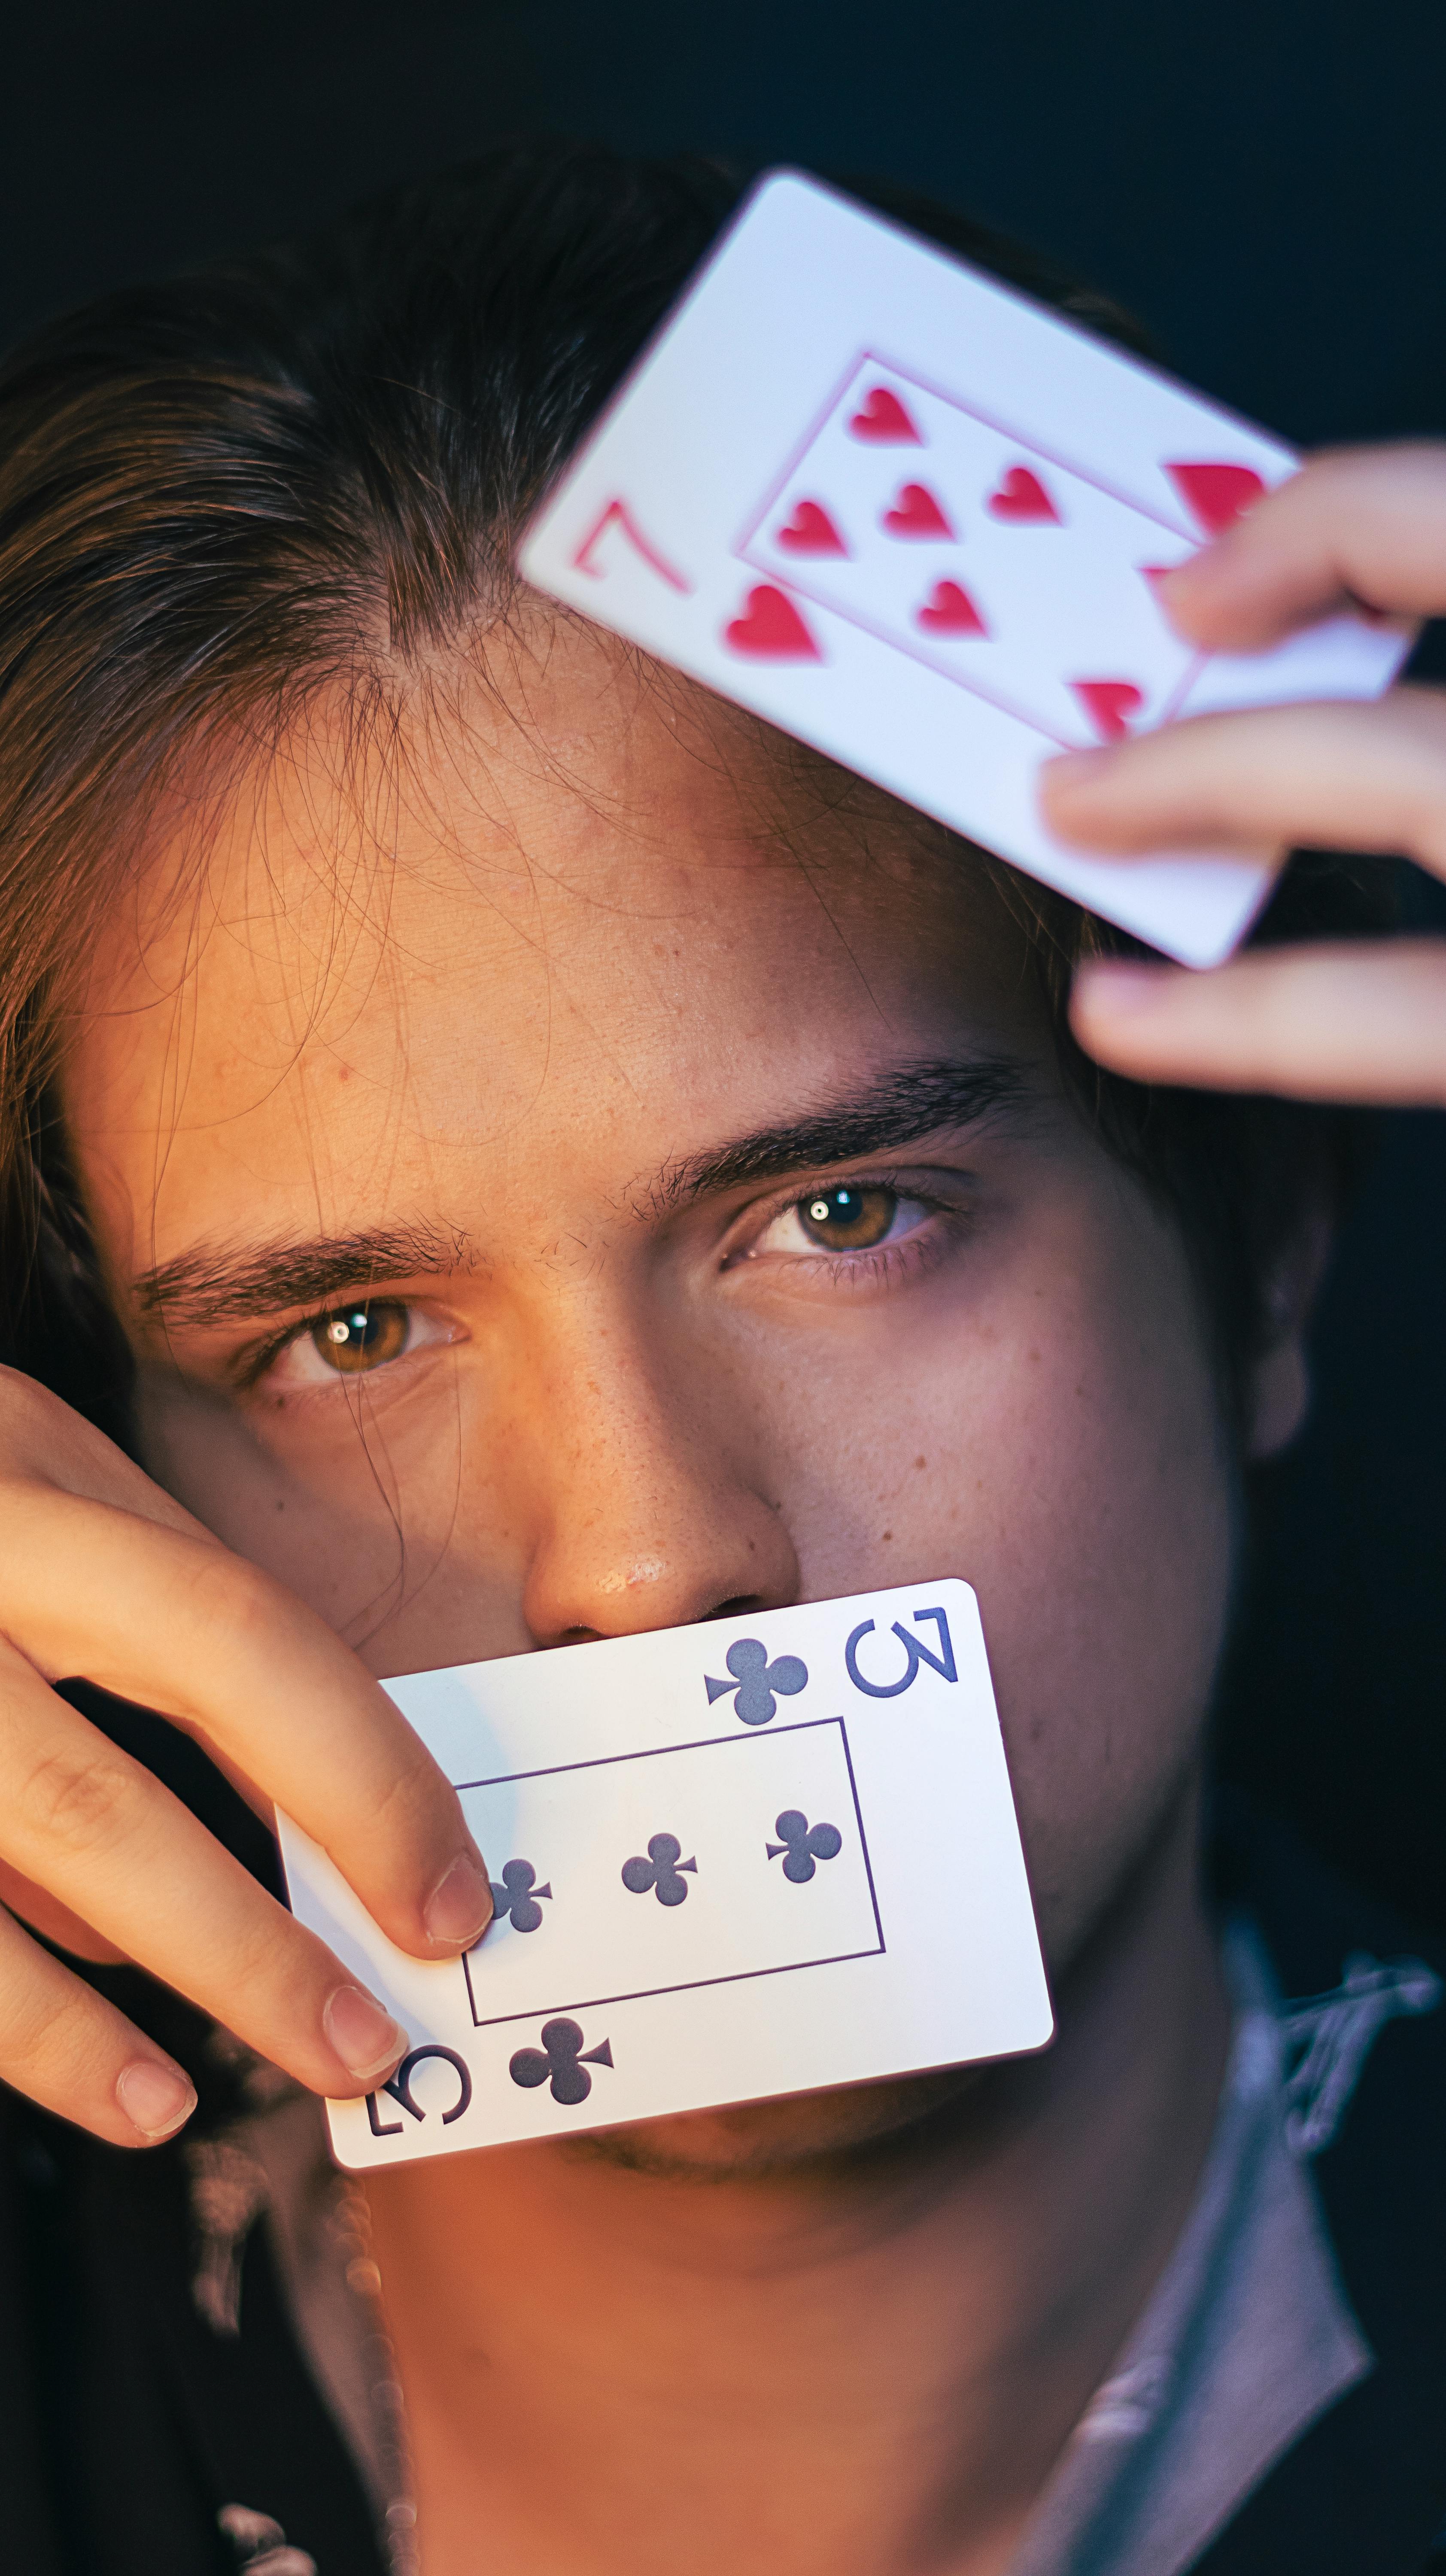 addiction bet casino luck